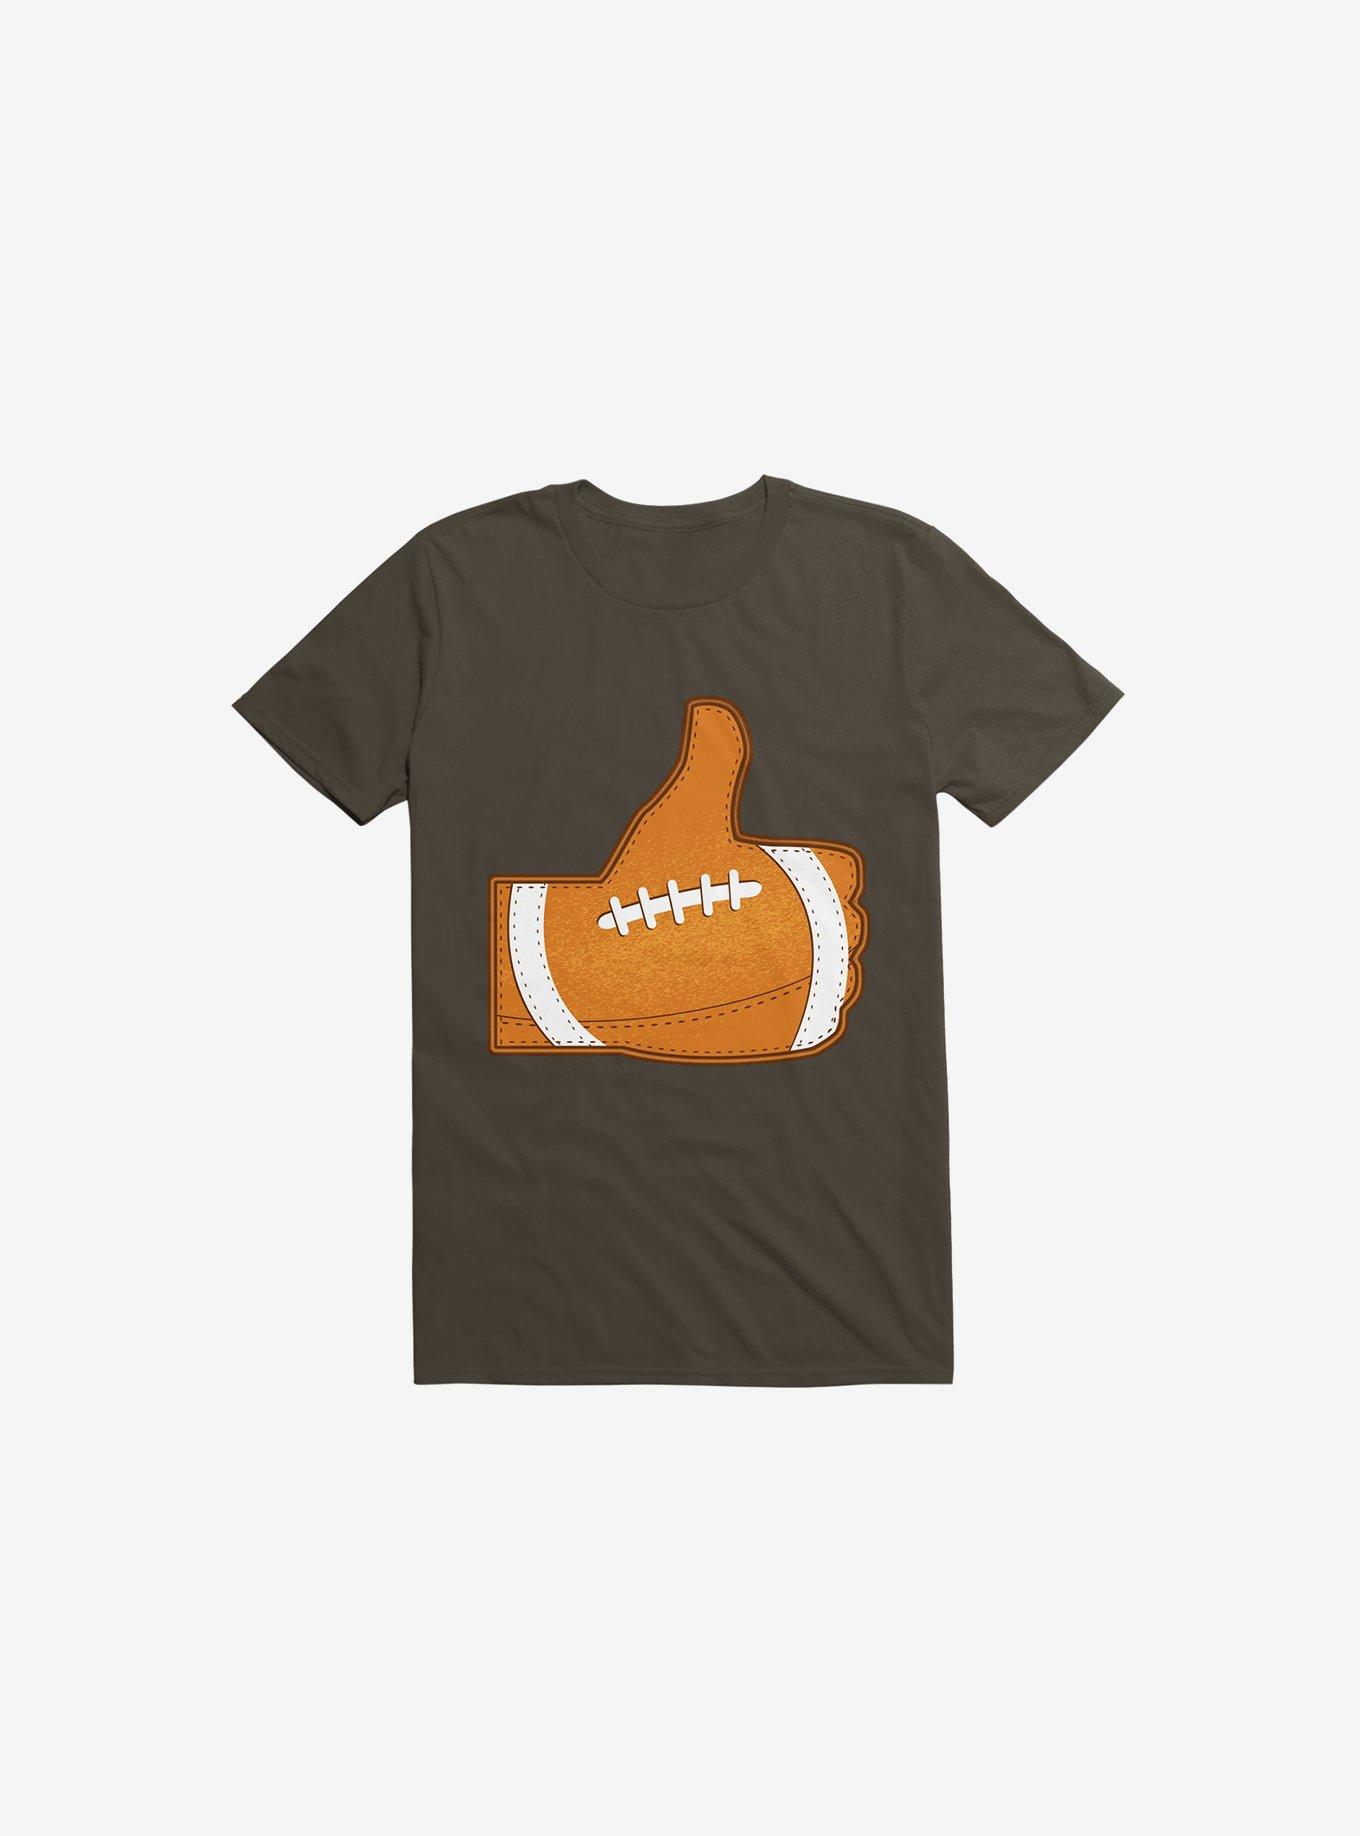 I Love Football 2.0 Brown T-Shirt, , hi-res